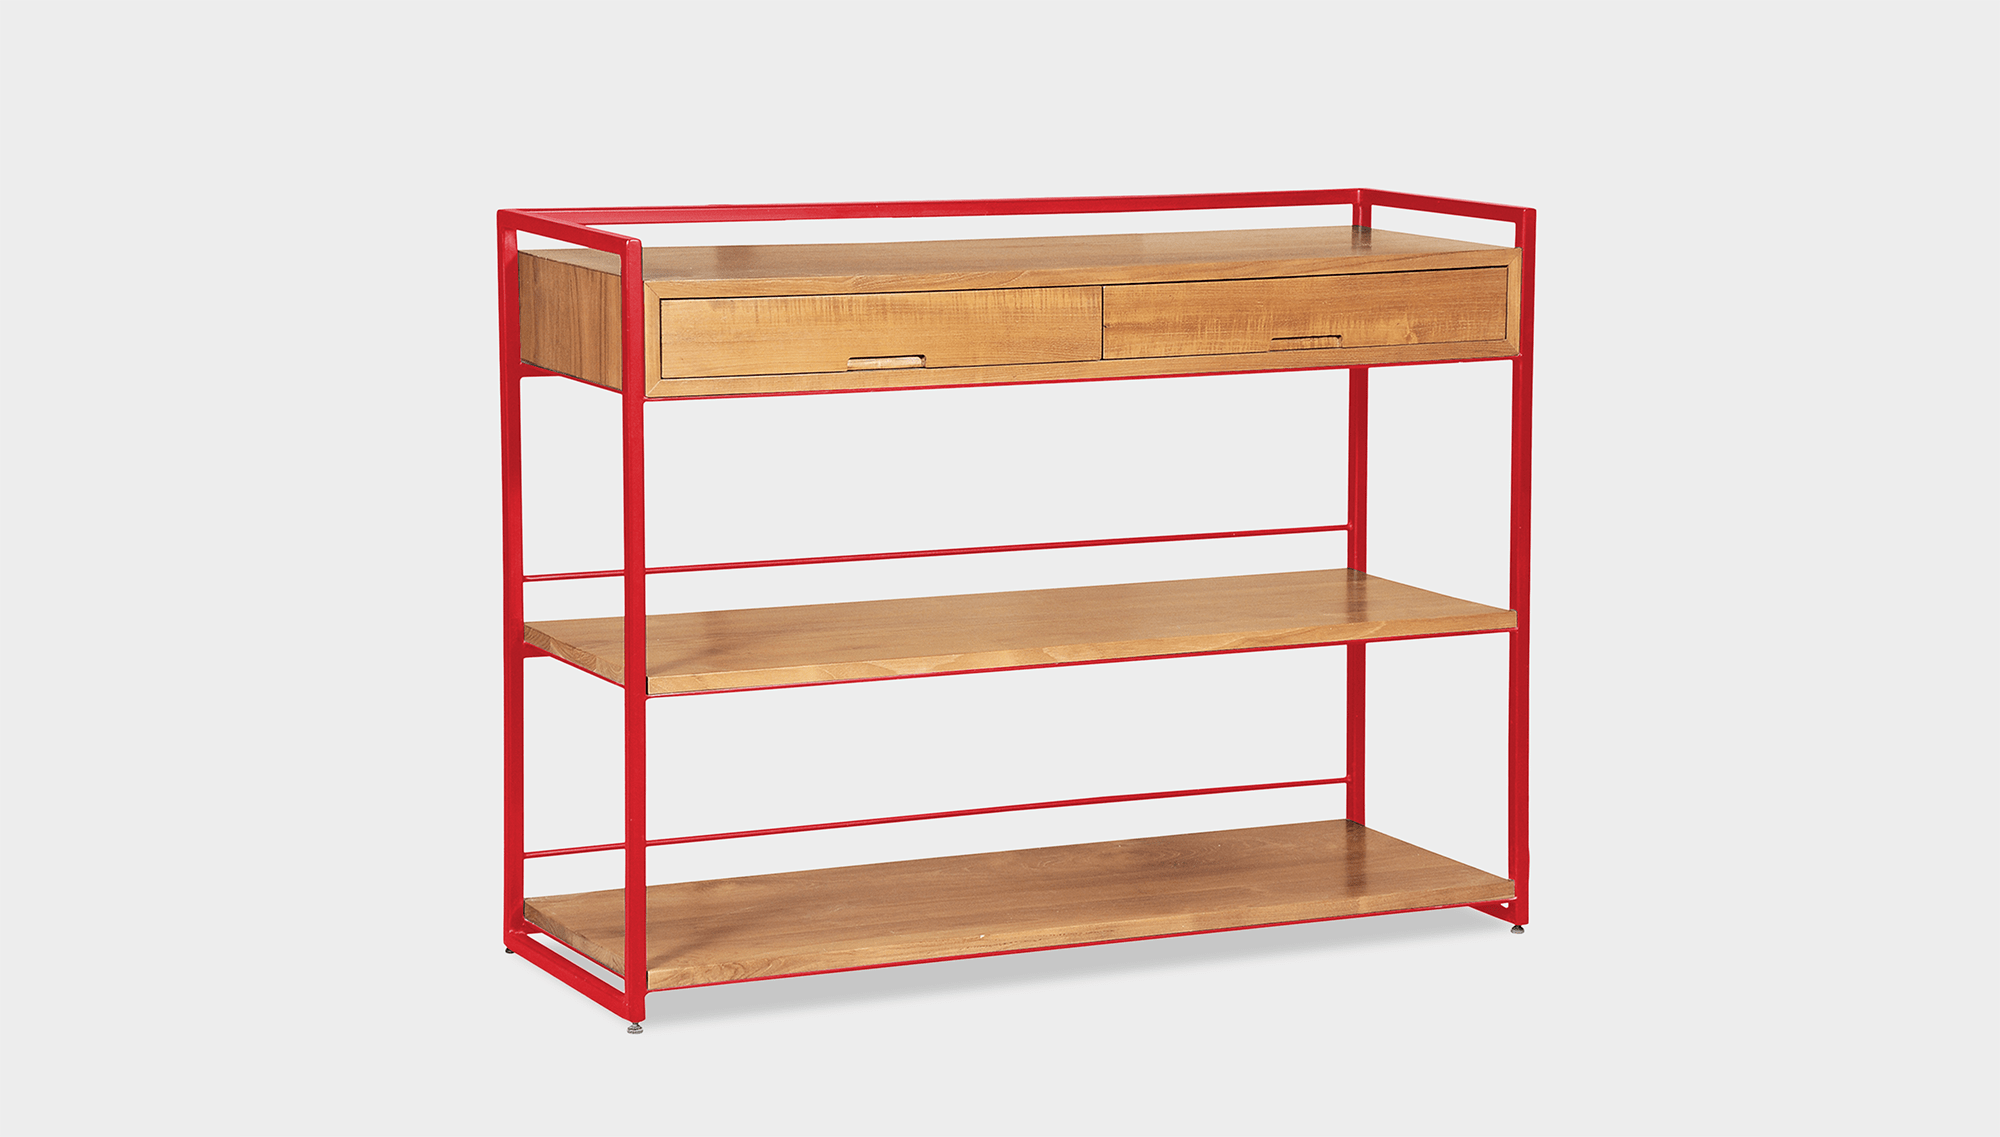 reddie-raw shelf 120W x 40D x 90H *cm / Wood Teak~Oak / Metal~Red Suzy Console Unit